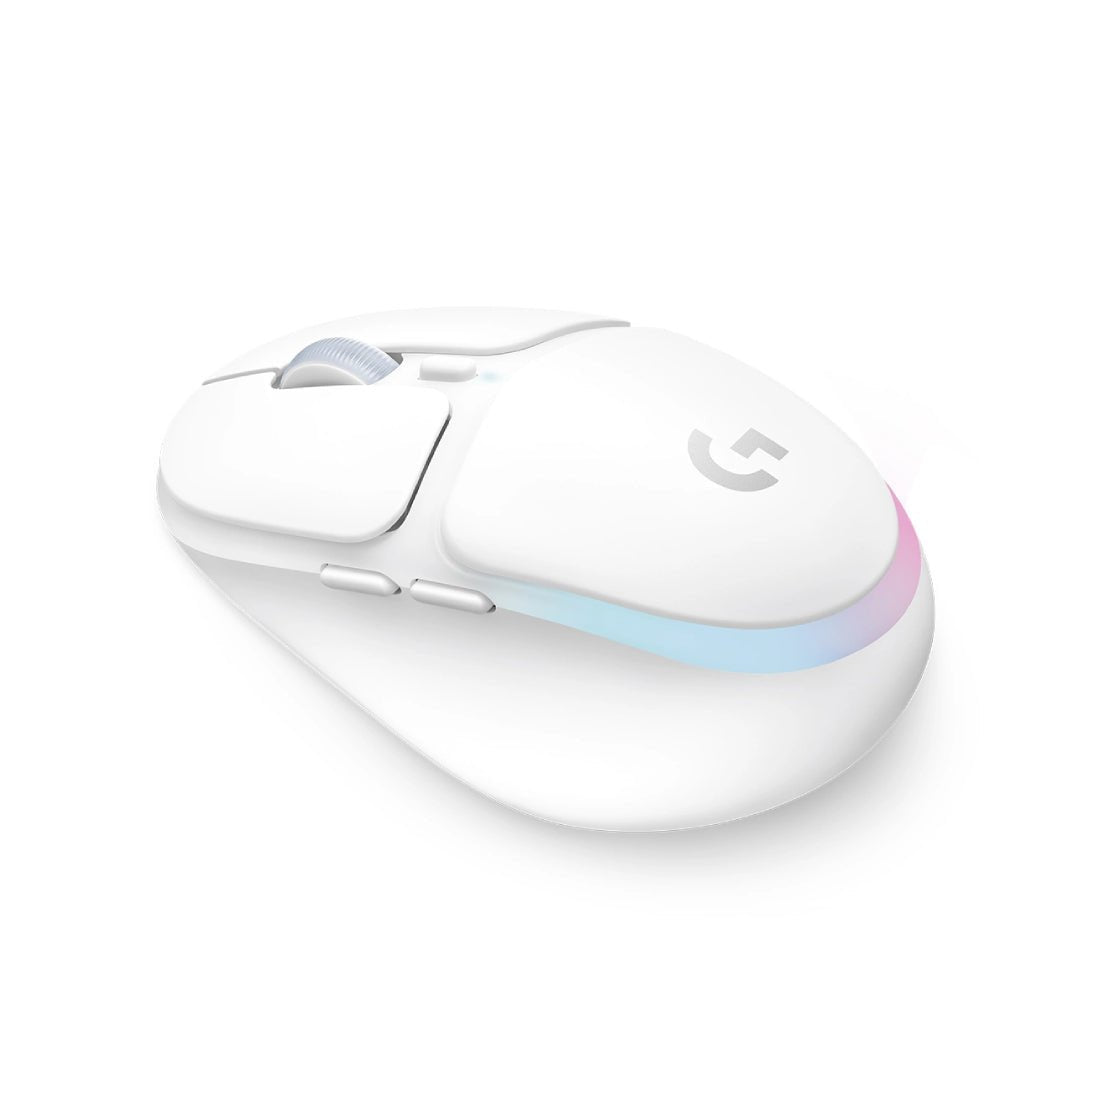 Logitech G705 Wireless Gaming Mouse - White Mist - Store 974 | ستور ٩٧٤